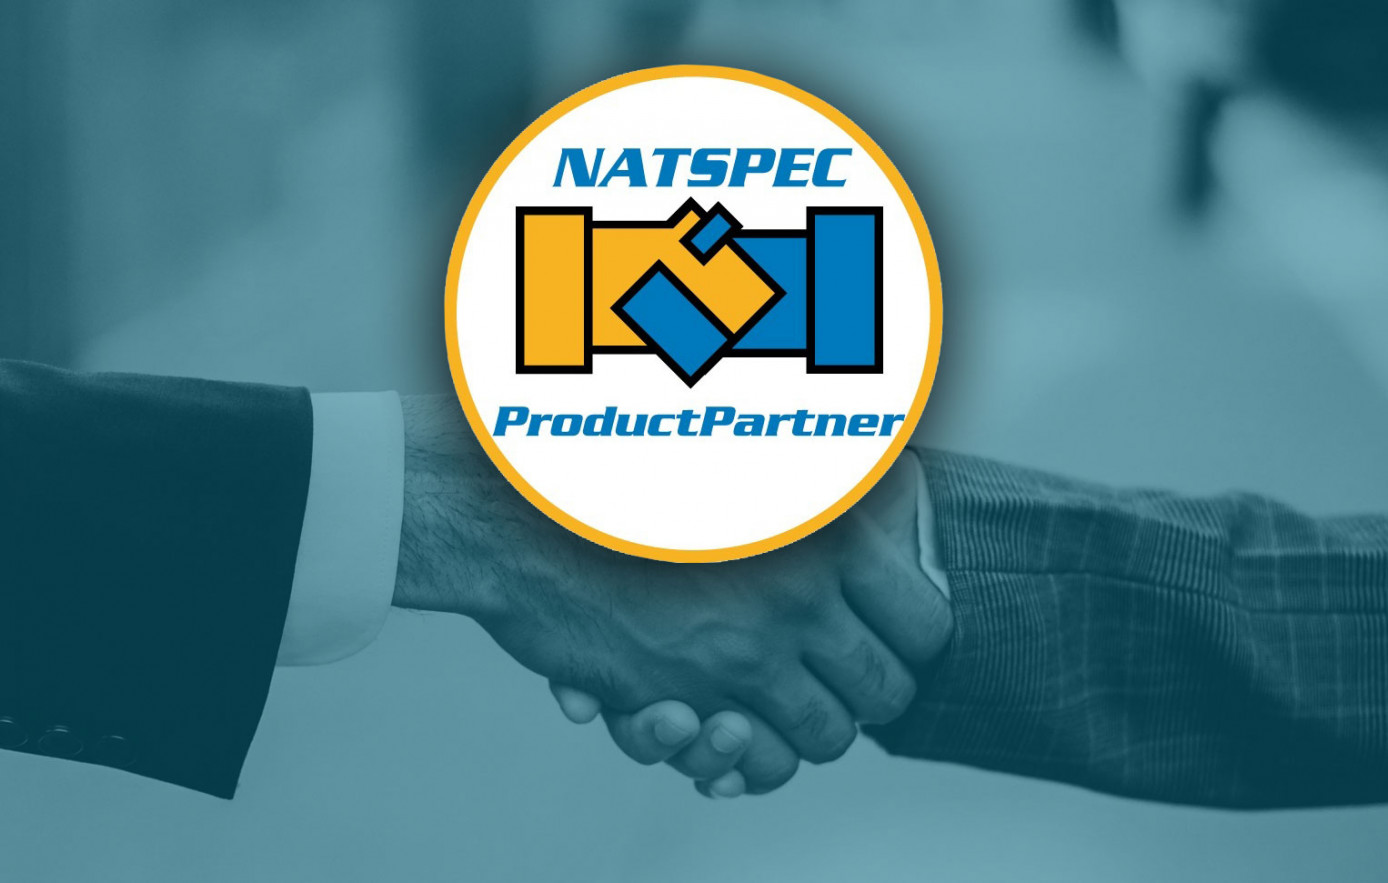 Hands Shaking with NATSPEC Product Partner Logo